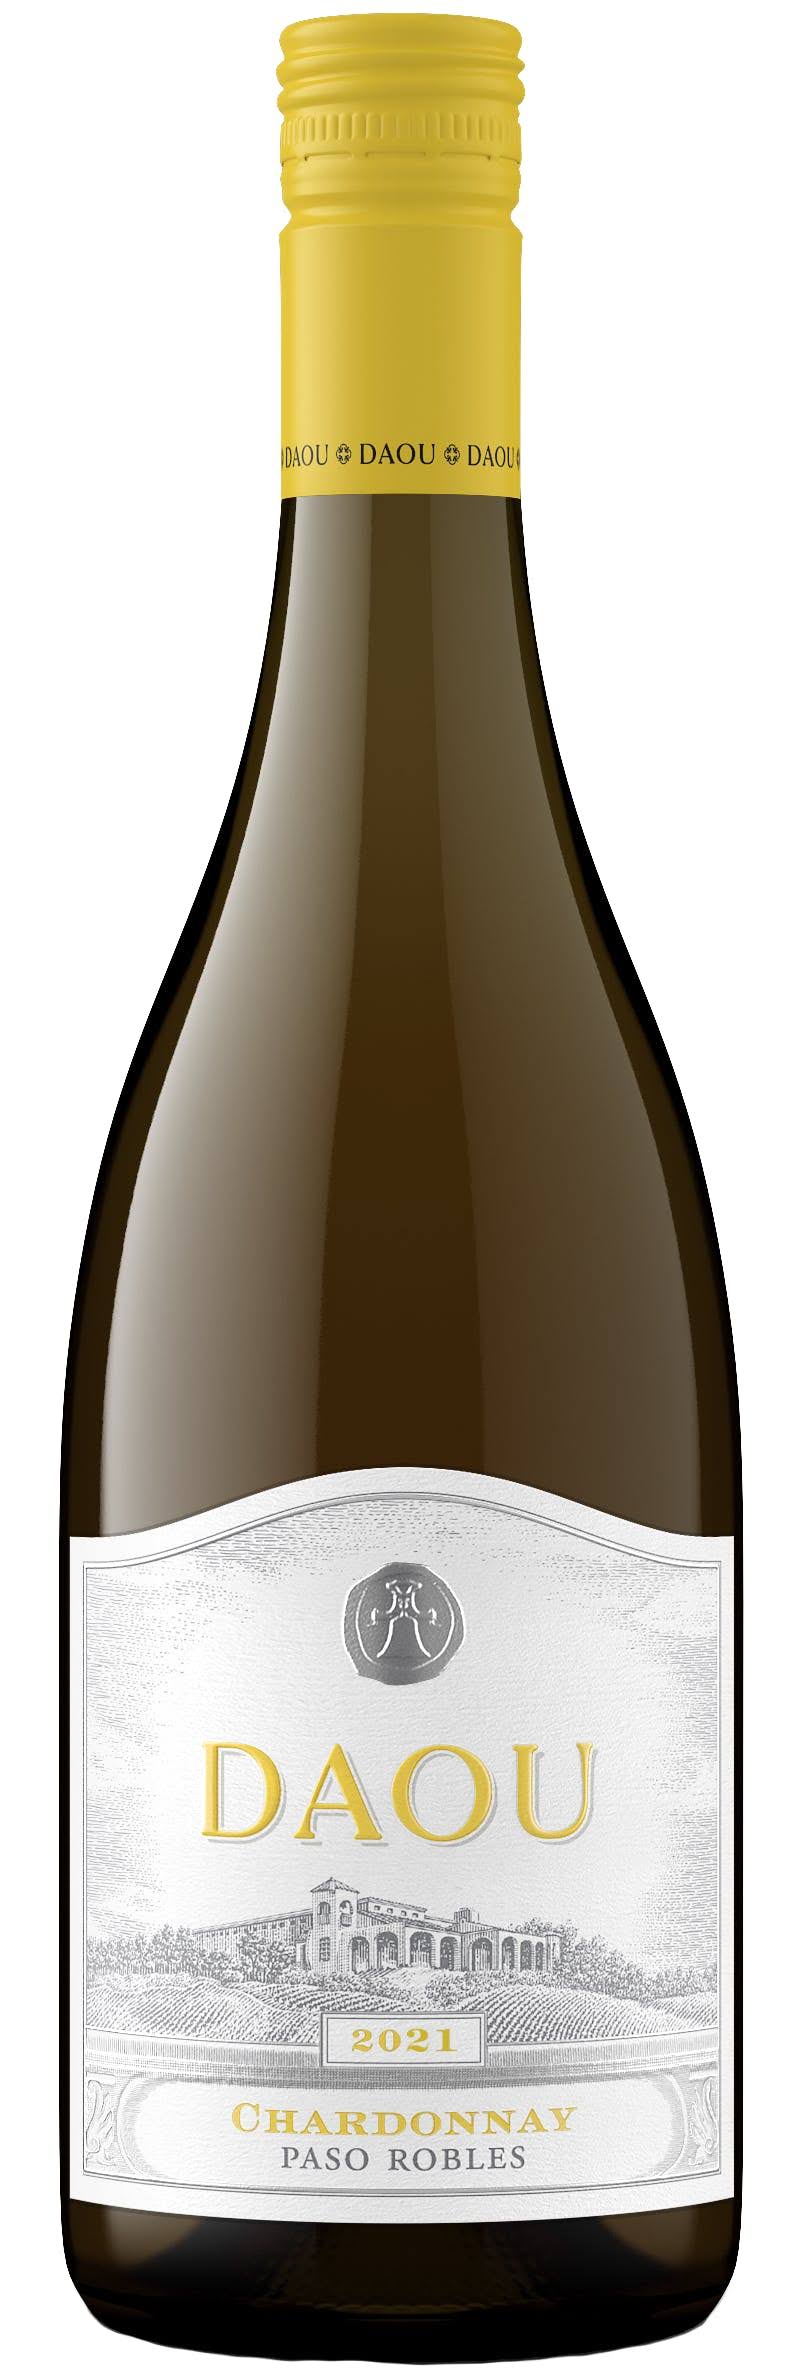 Daou Chardonnay, Paso Robles, 2019 - 750 ml